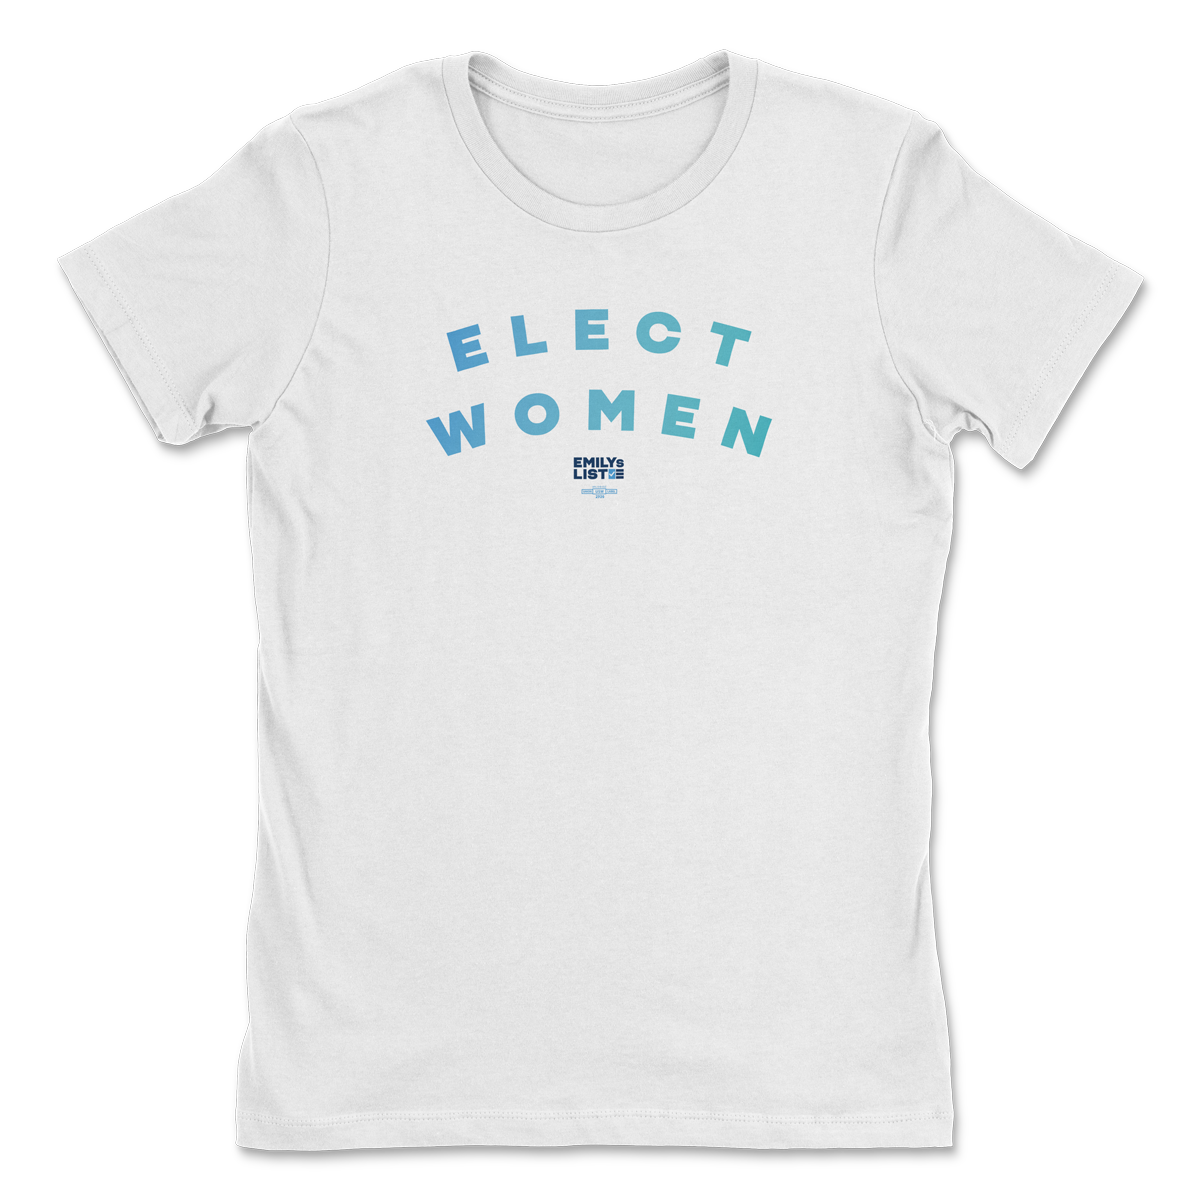 Elect Women Tee